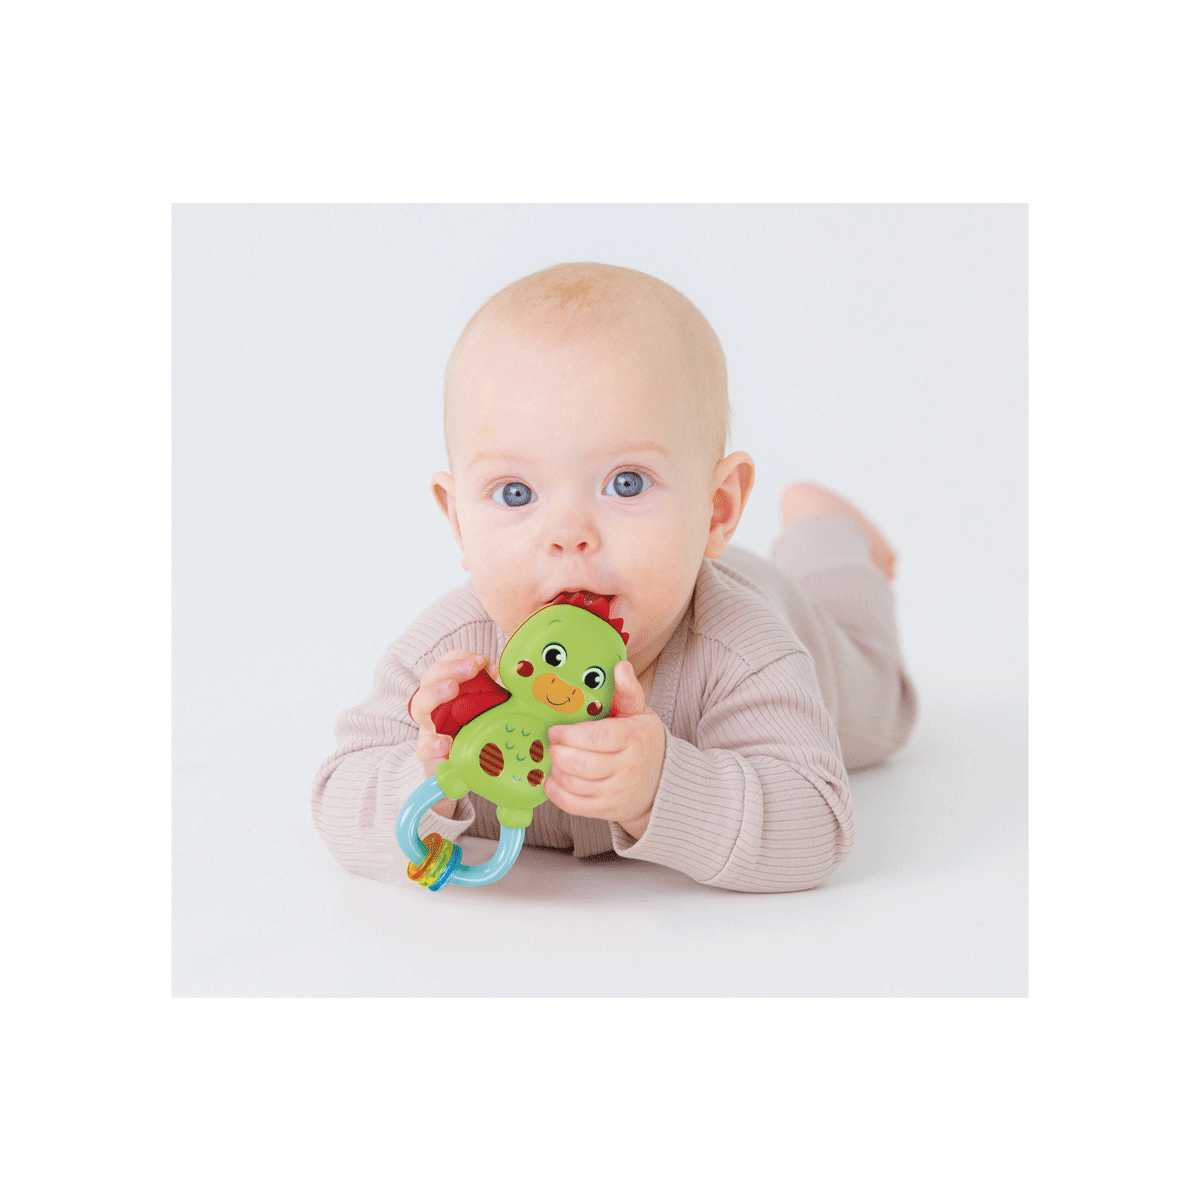 Baby clementoni - little dragon rattle - sonaglino neonato con massaggiagengive - BABY CLEMENTONI